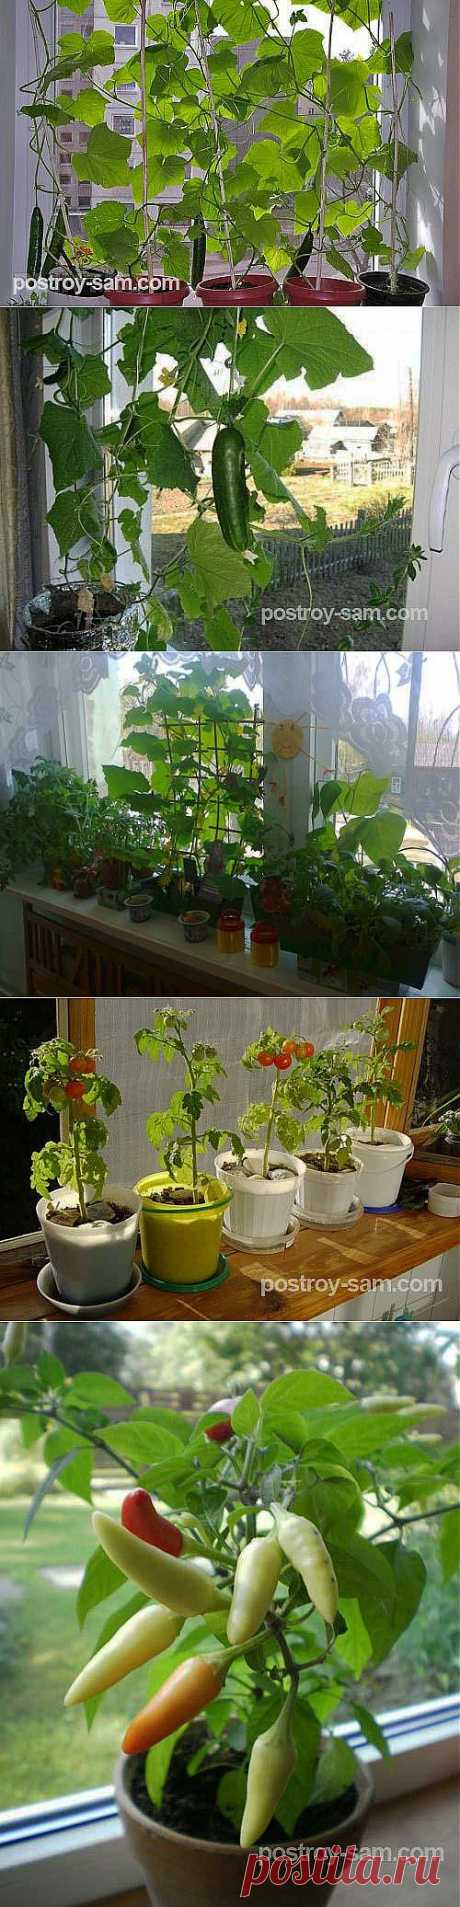 Огород на подоконнике. Выращивание овощей на подоконнике в квартире